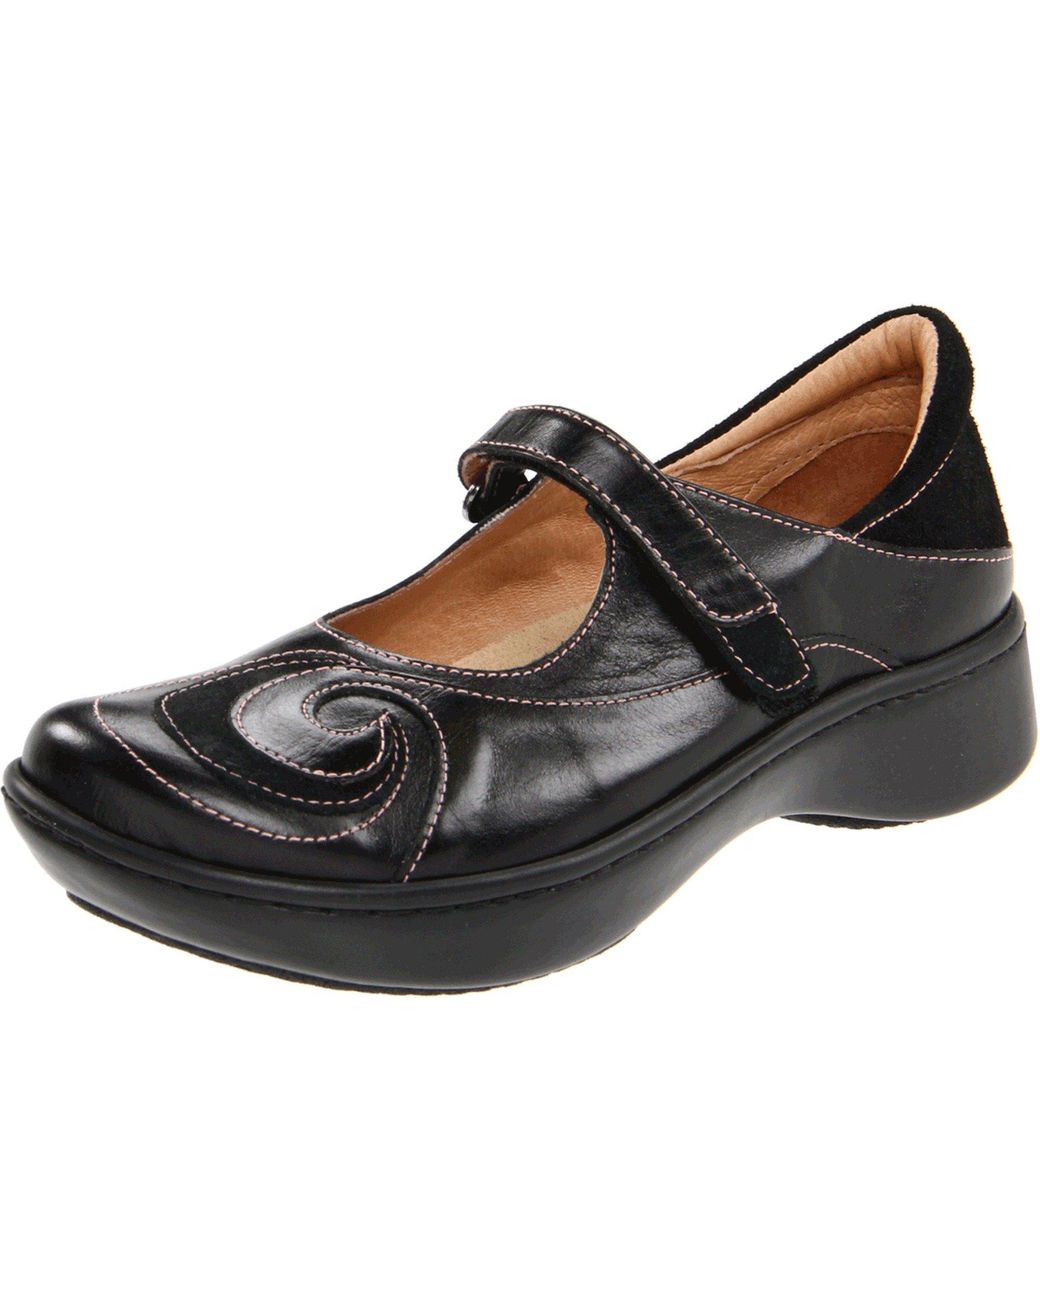 Naot Women's Sea Casual Shoes Black